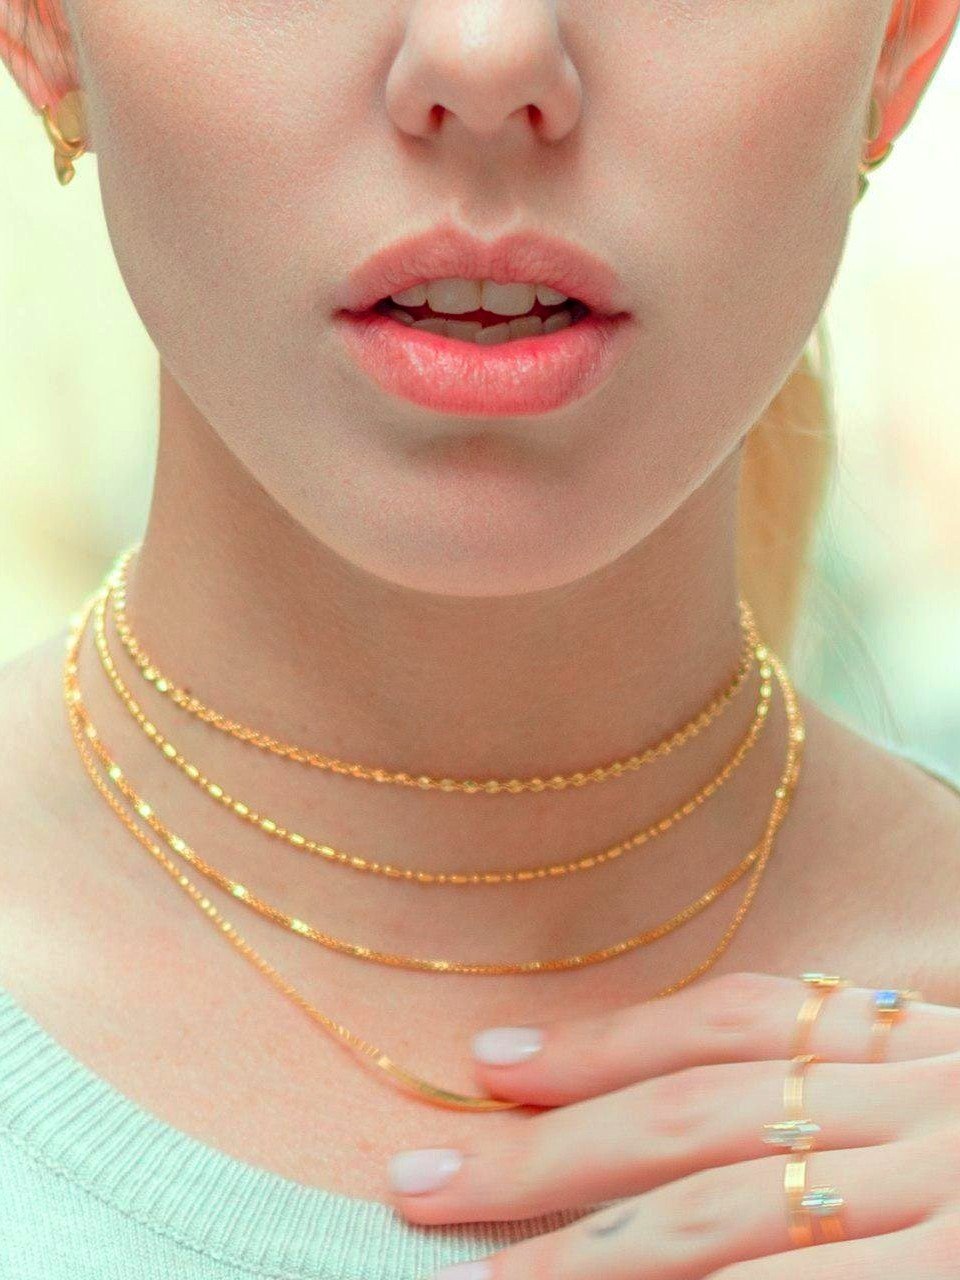 Cecilia Dainty Necklace - 24K Gold PlatedAnniversary GiftBackUpItemsLunai Jewelry